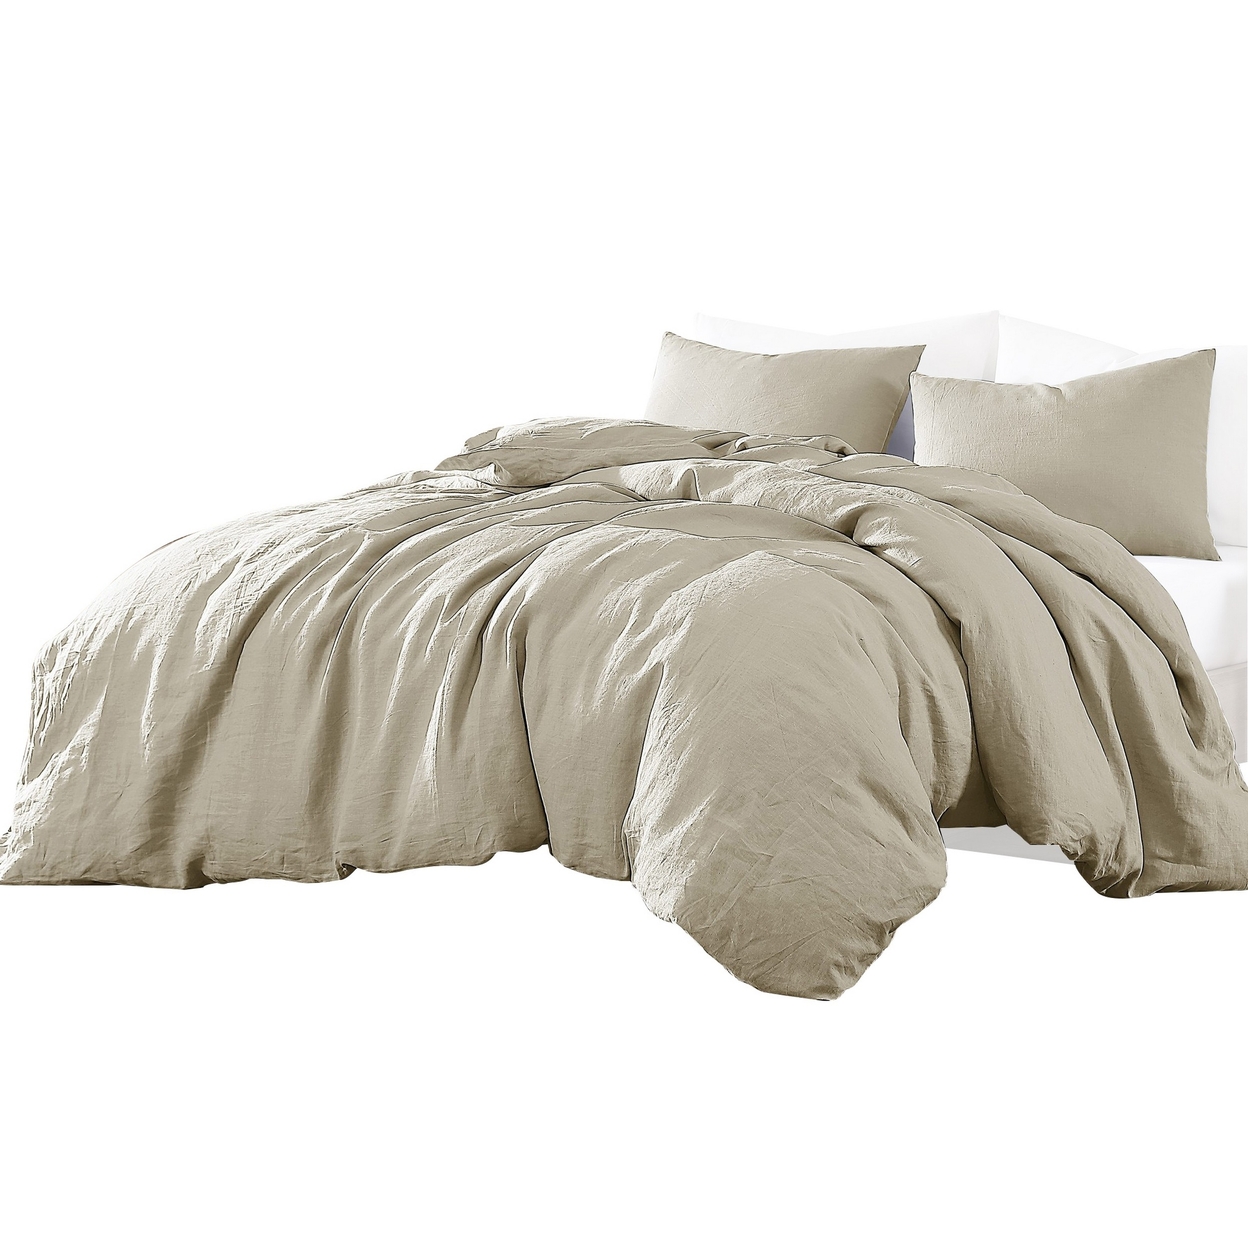 Edge 4 Piece Queen Size Duvet Comforter Set, Washed Linen, Oatmeal Beige - Saltoro Sherpi